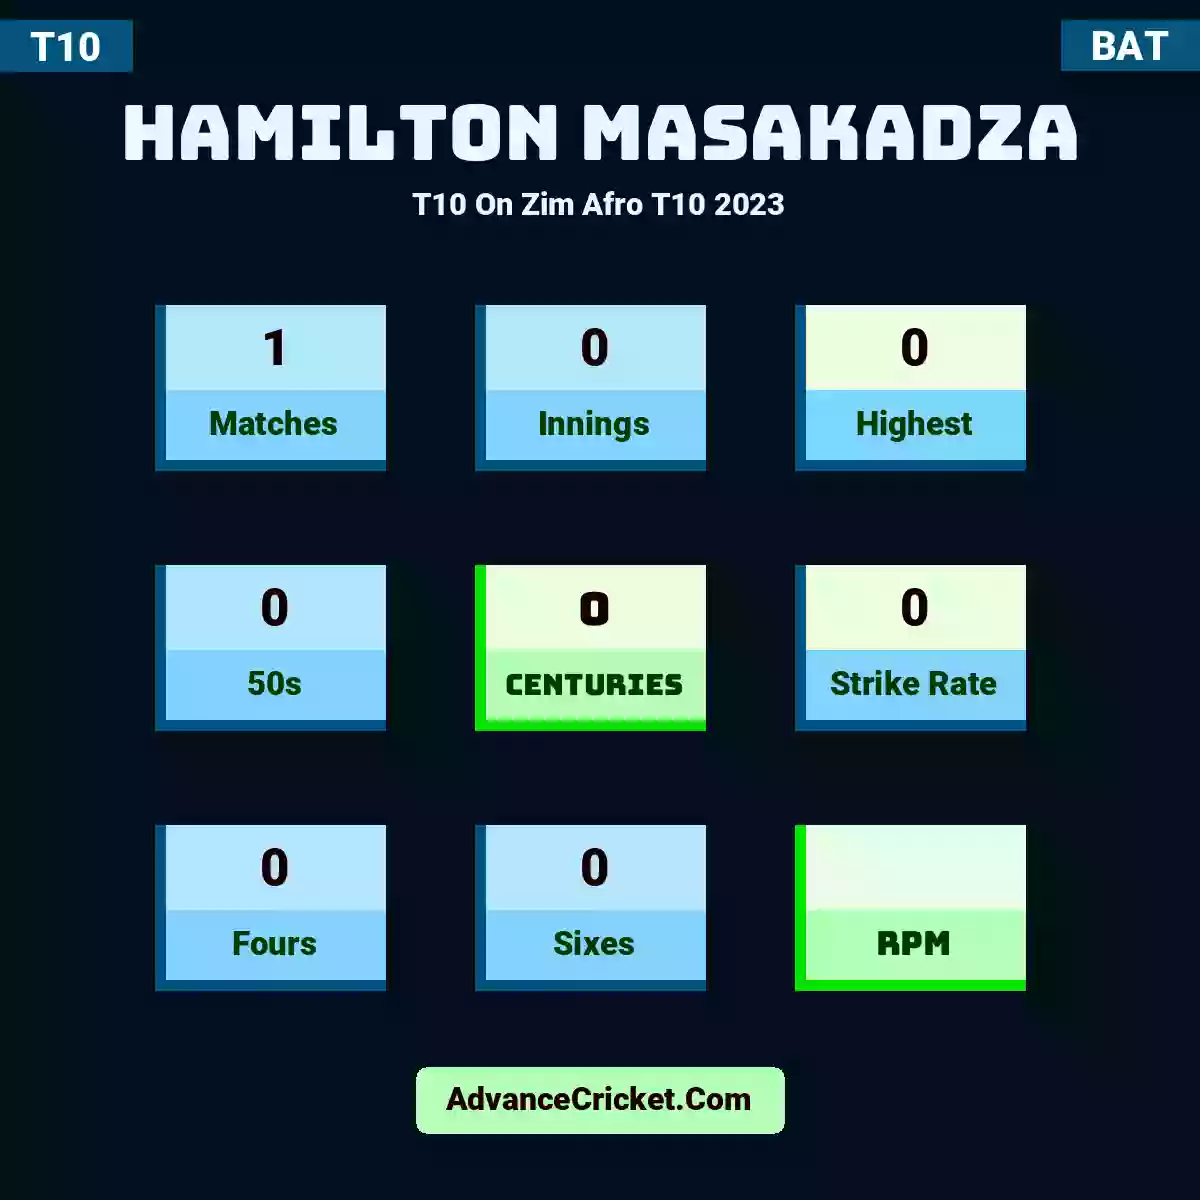 Hamilton Masakadza T10  On Zim Afro T10 2023, Hamilton Masakadza played 1 matches, scored 0 runs as highest, 0 half-centuries, and 0 centuries, with a strike rate of 0. H.Masakadza hit 0 fours and 0 sixes.